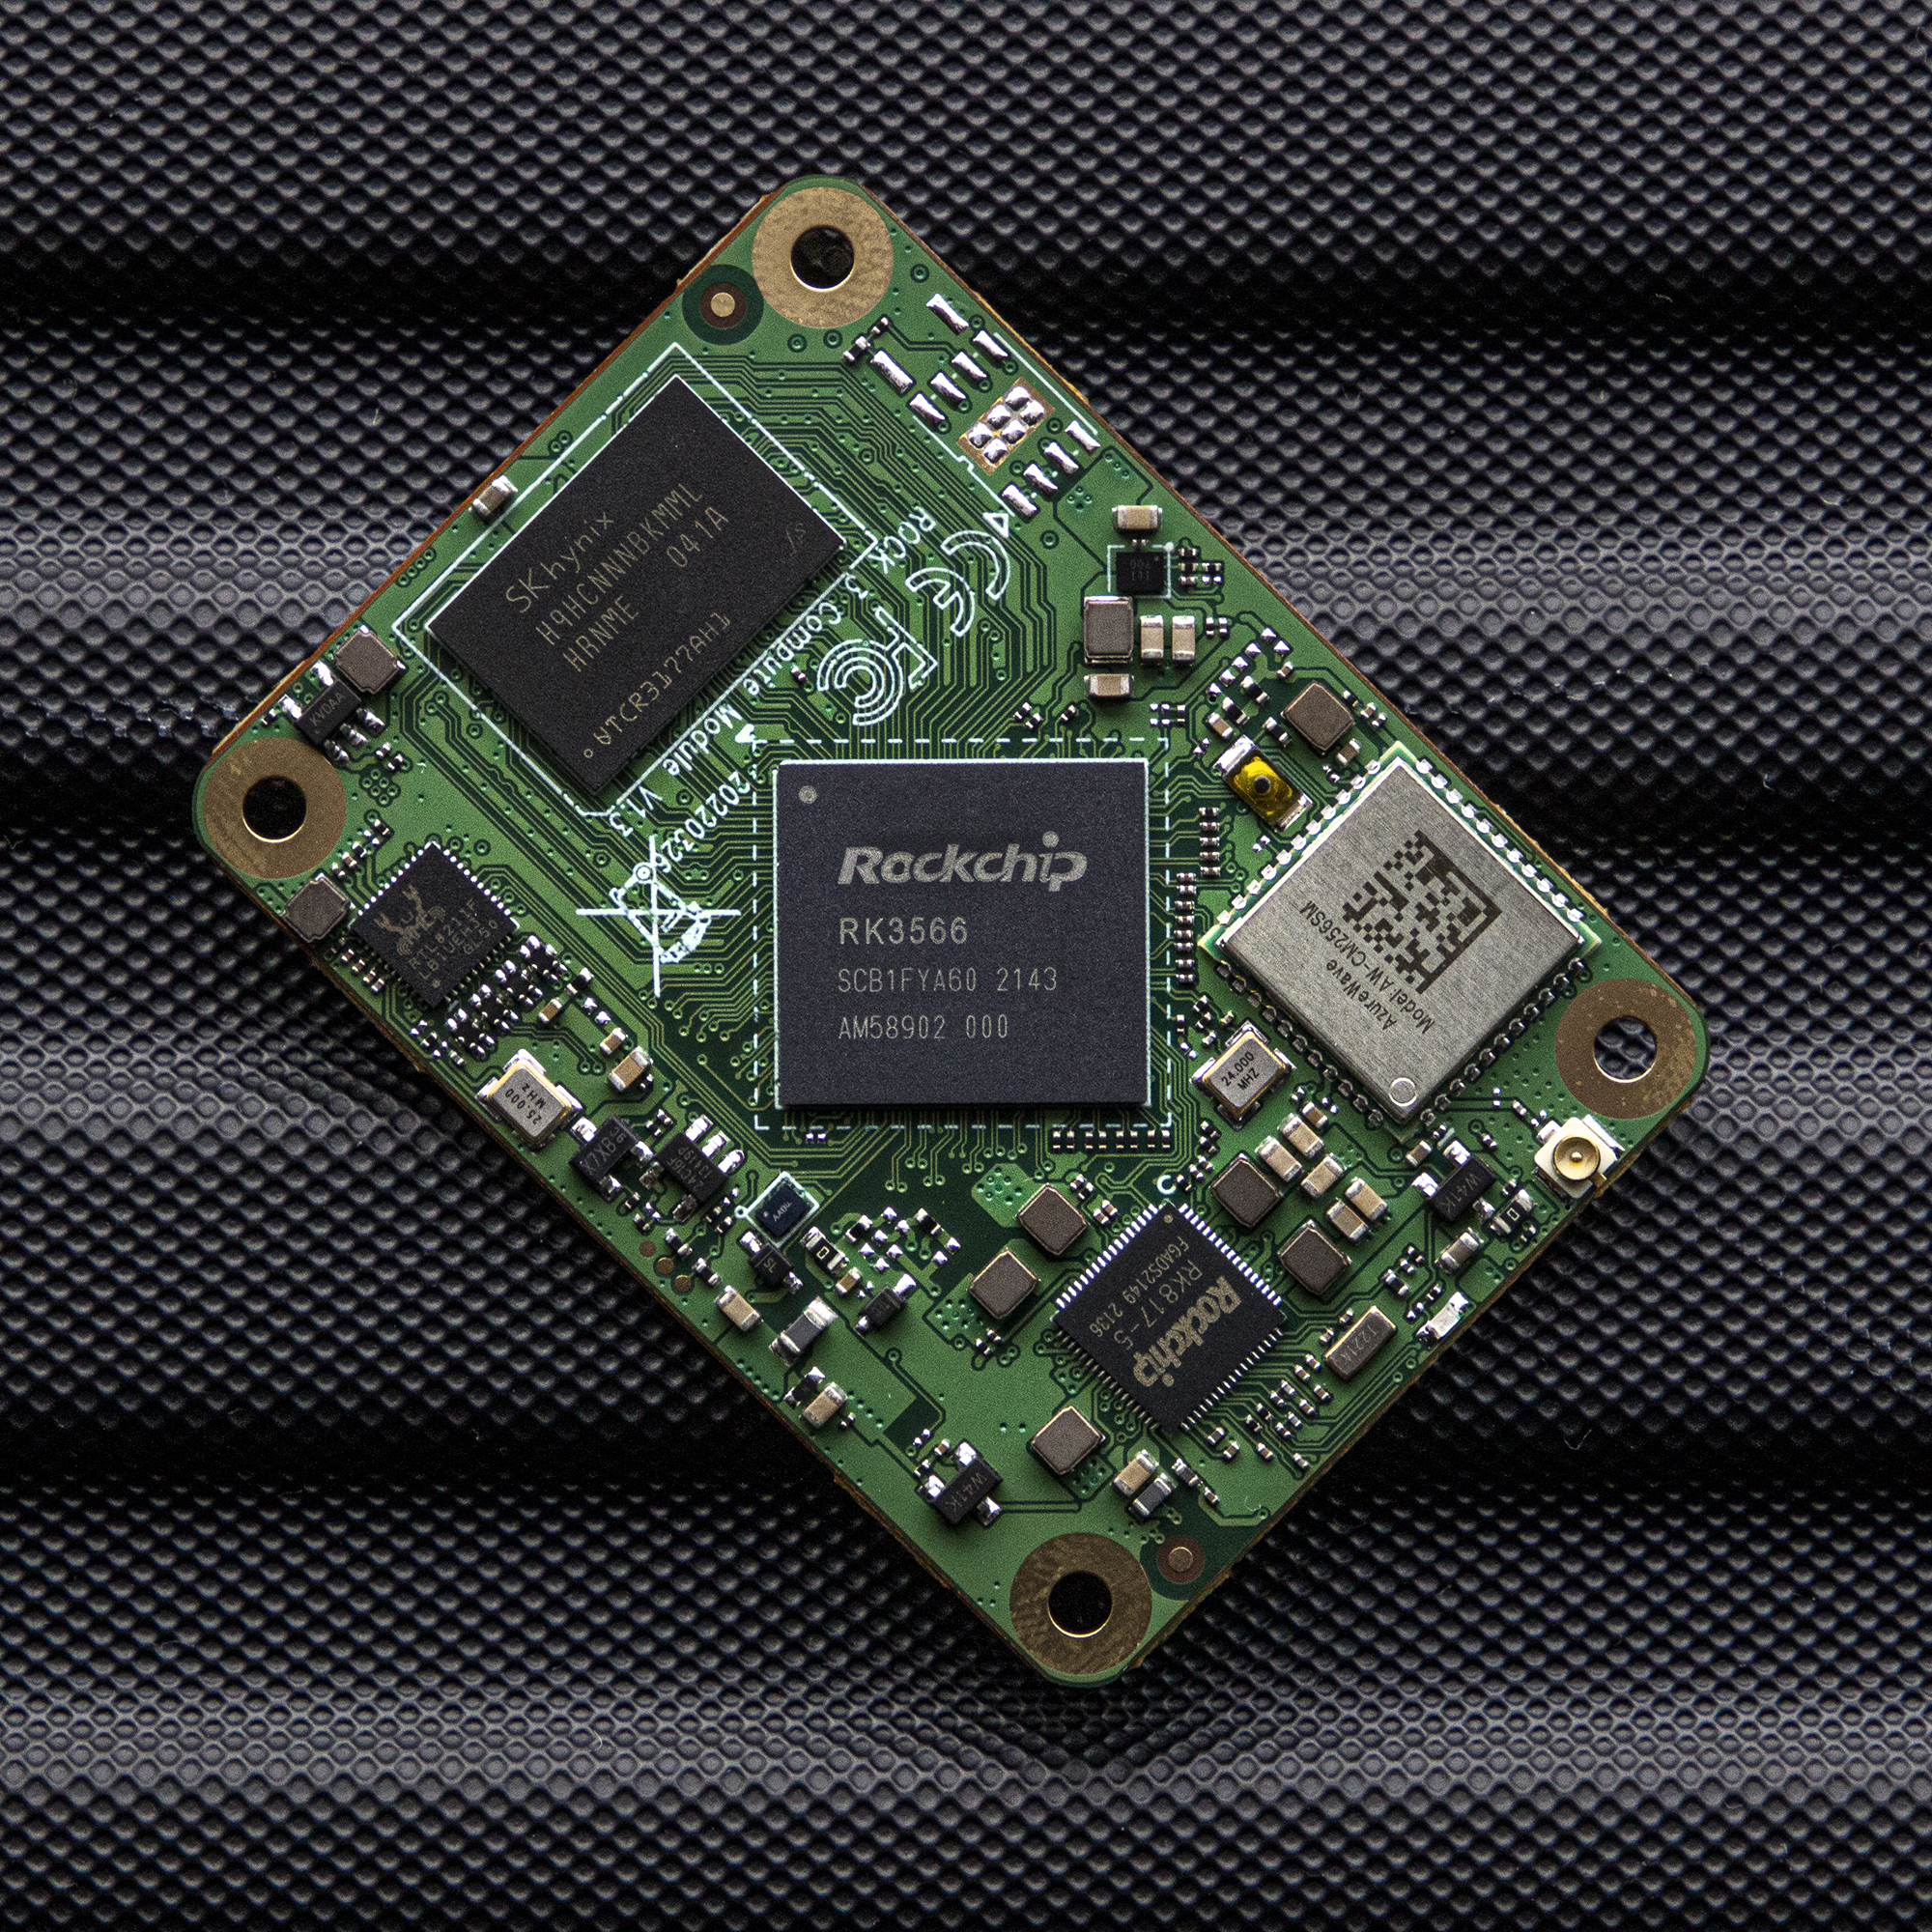 OKdo ROCK 3 Compute Module (CM3) 2GB/16GB with WiFi/Bluetooth